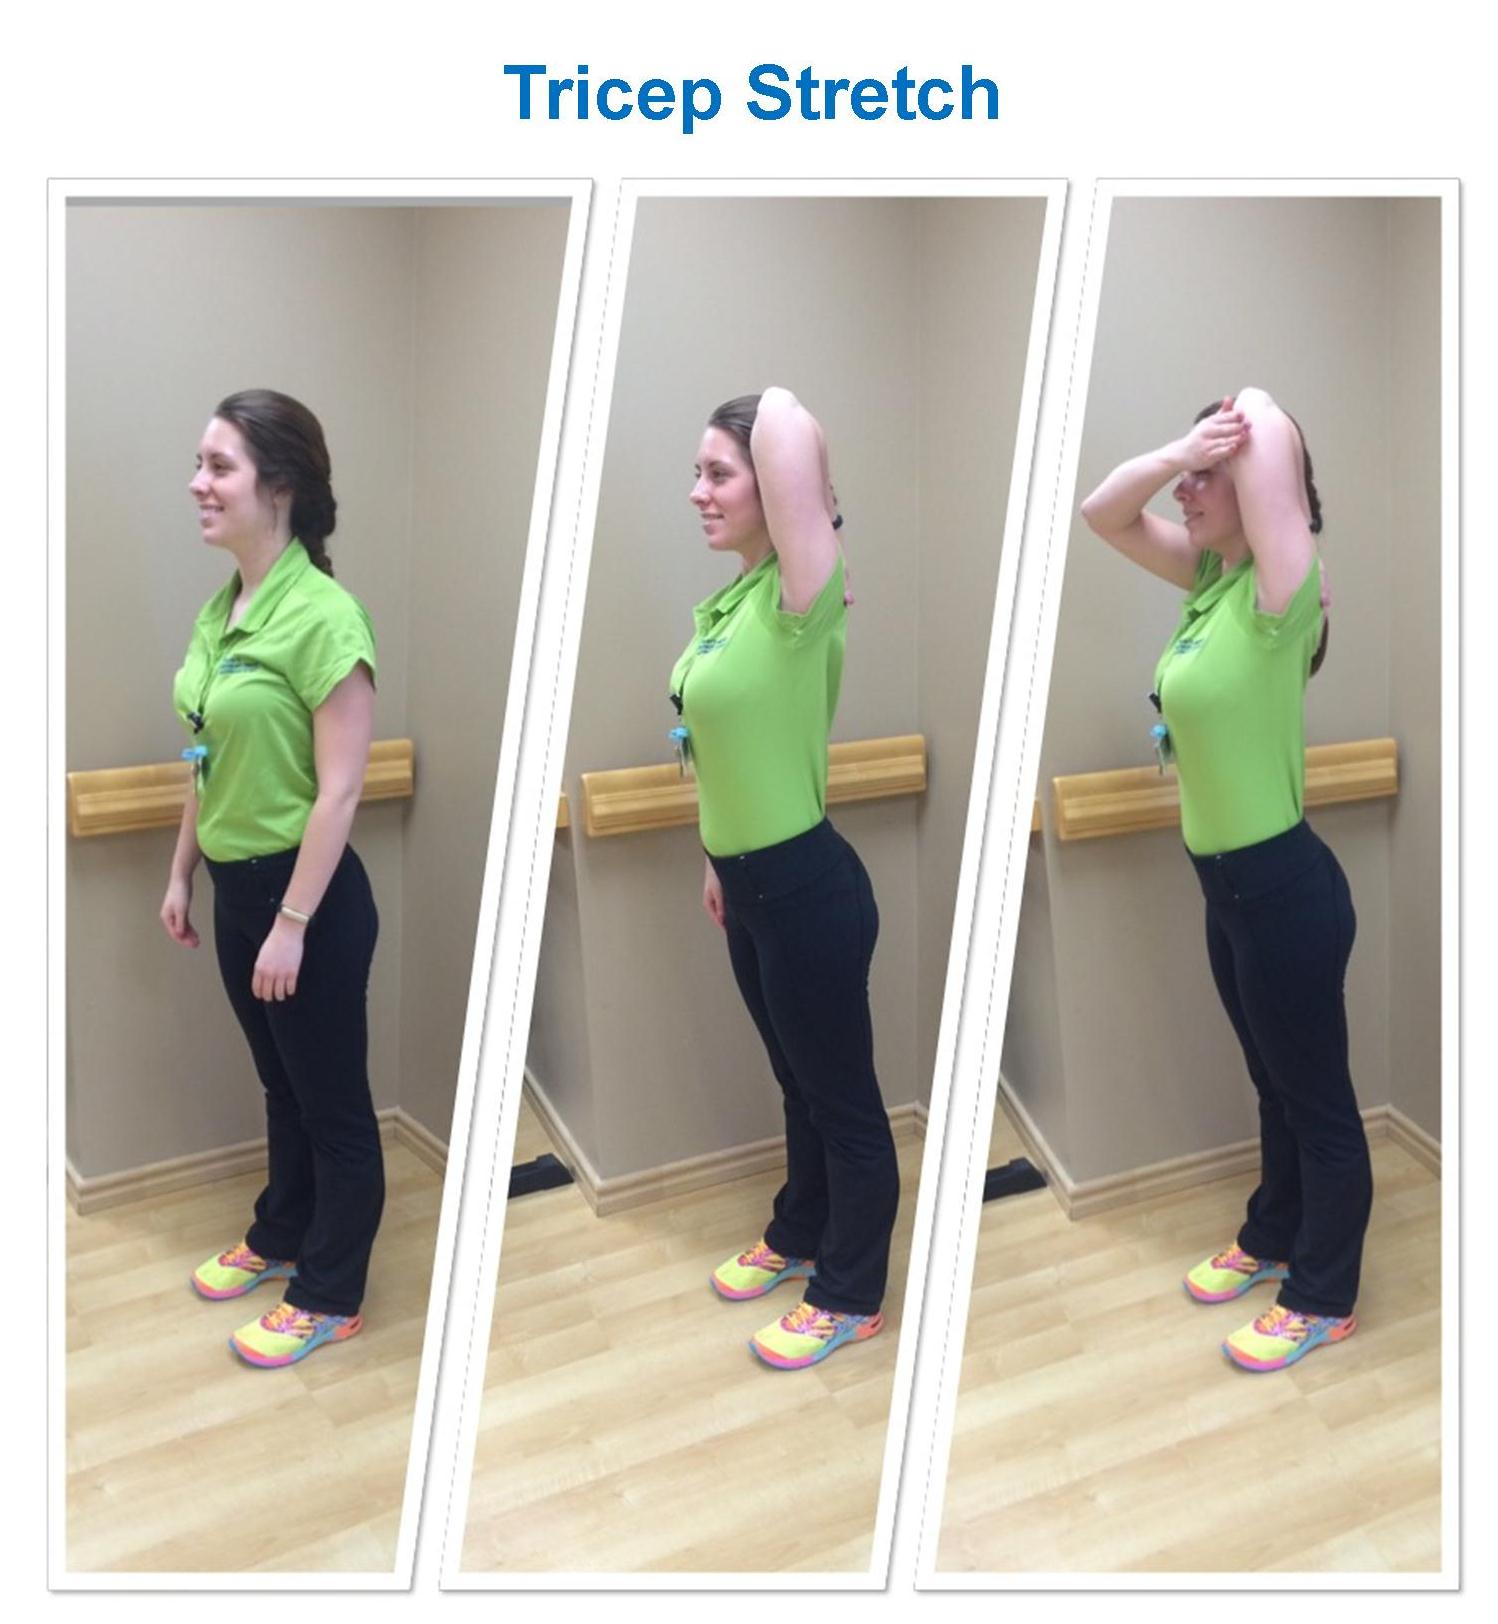 Tricep stretch